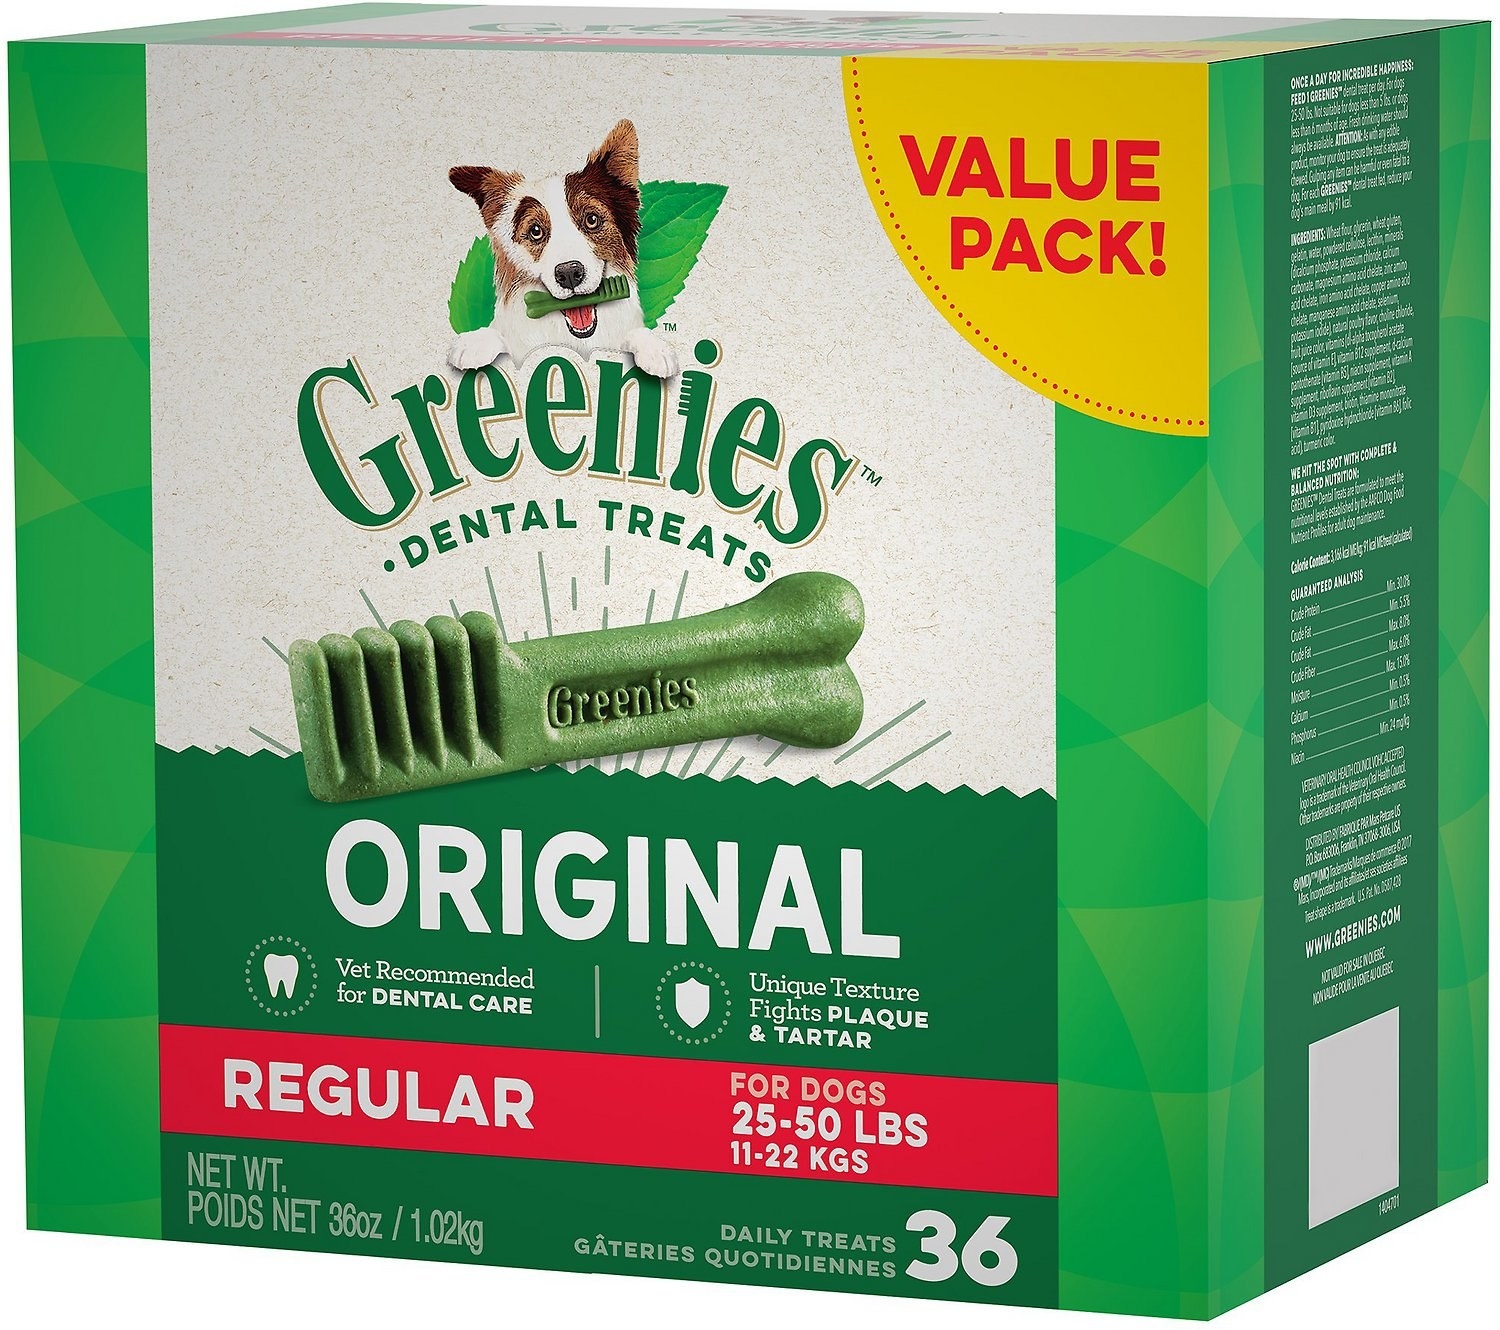 The box of Greenies dental treats